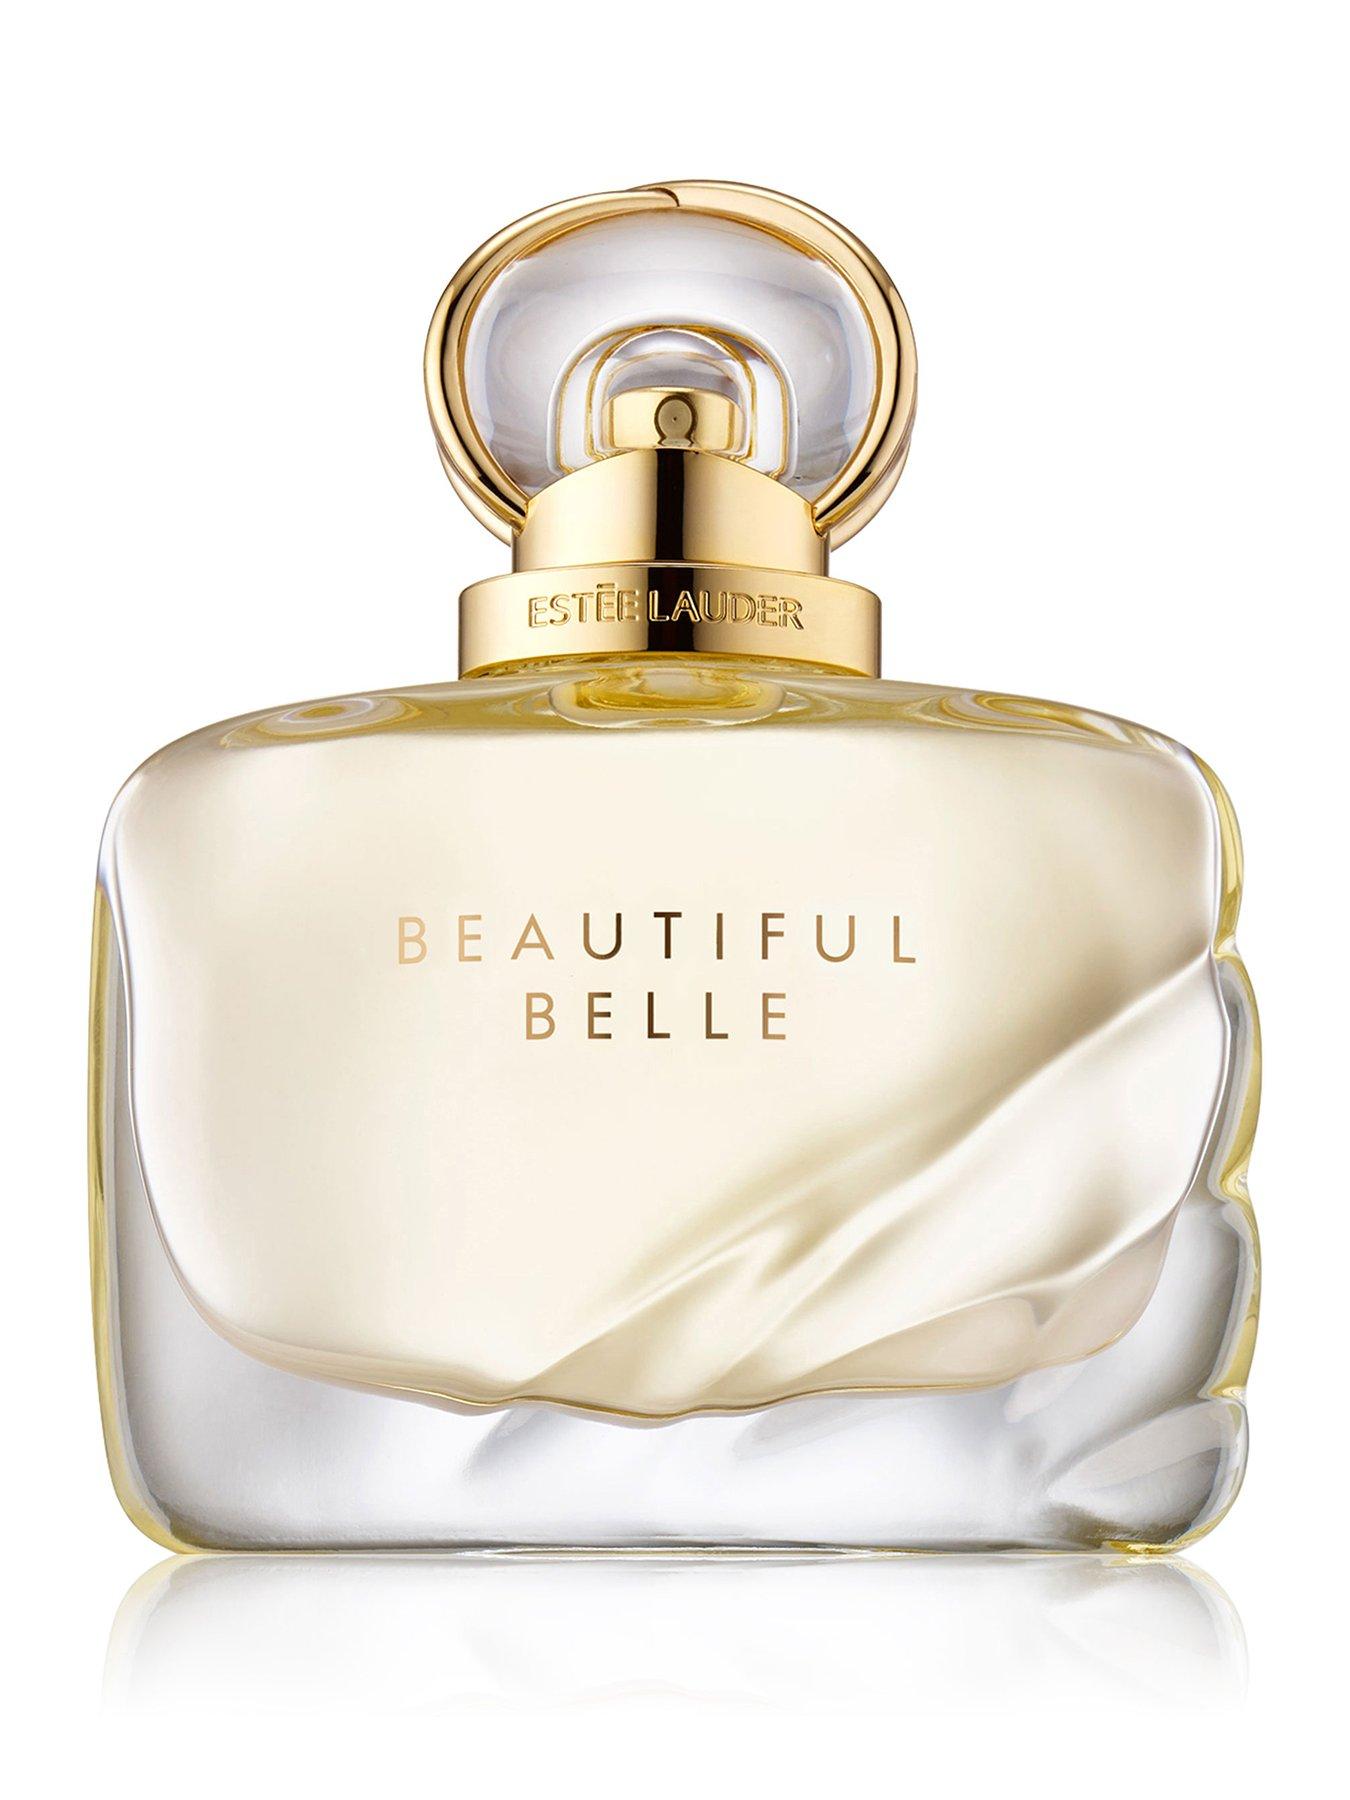 Cashmere Glow Bath &amp; Body Works perfume - a fragrance for women 2012